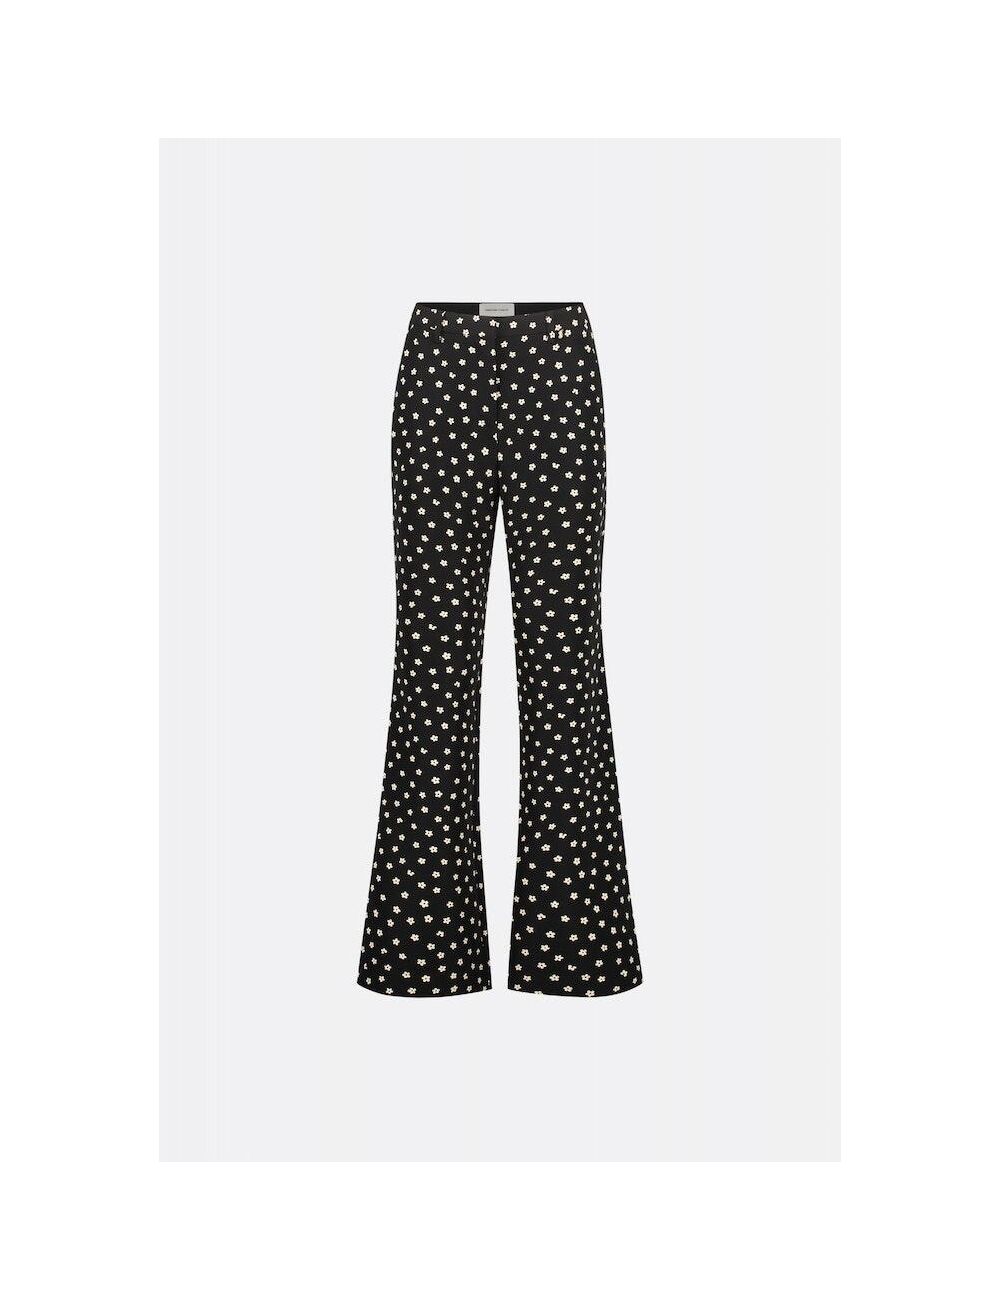 Fabienne Chapot puck trousers Broek 9001-1508-ult black/oat melange ...